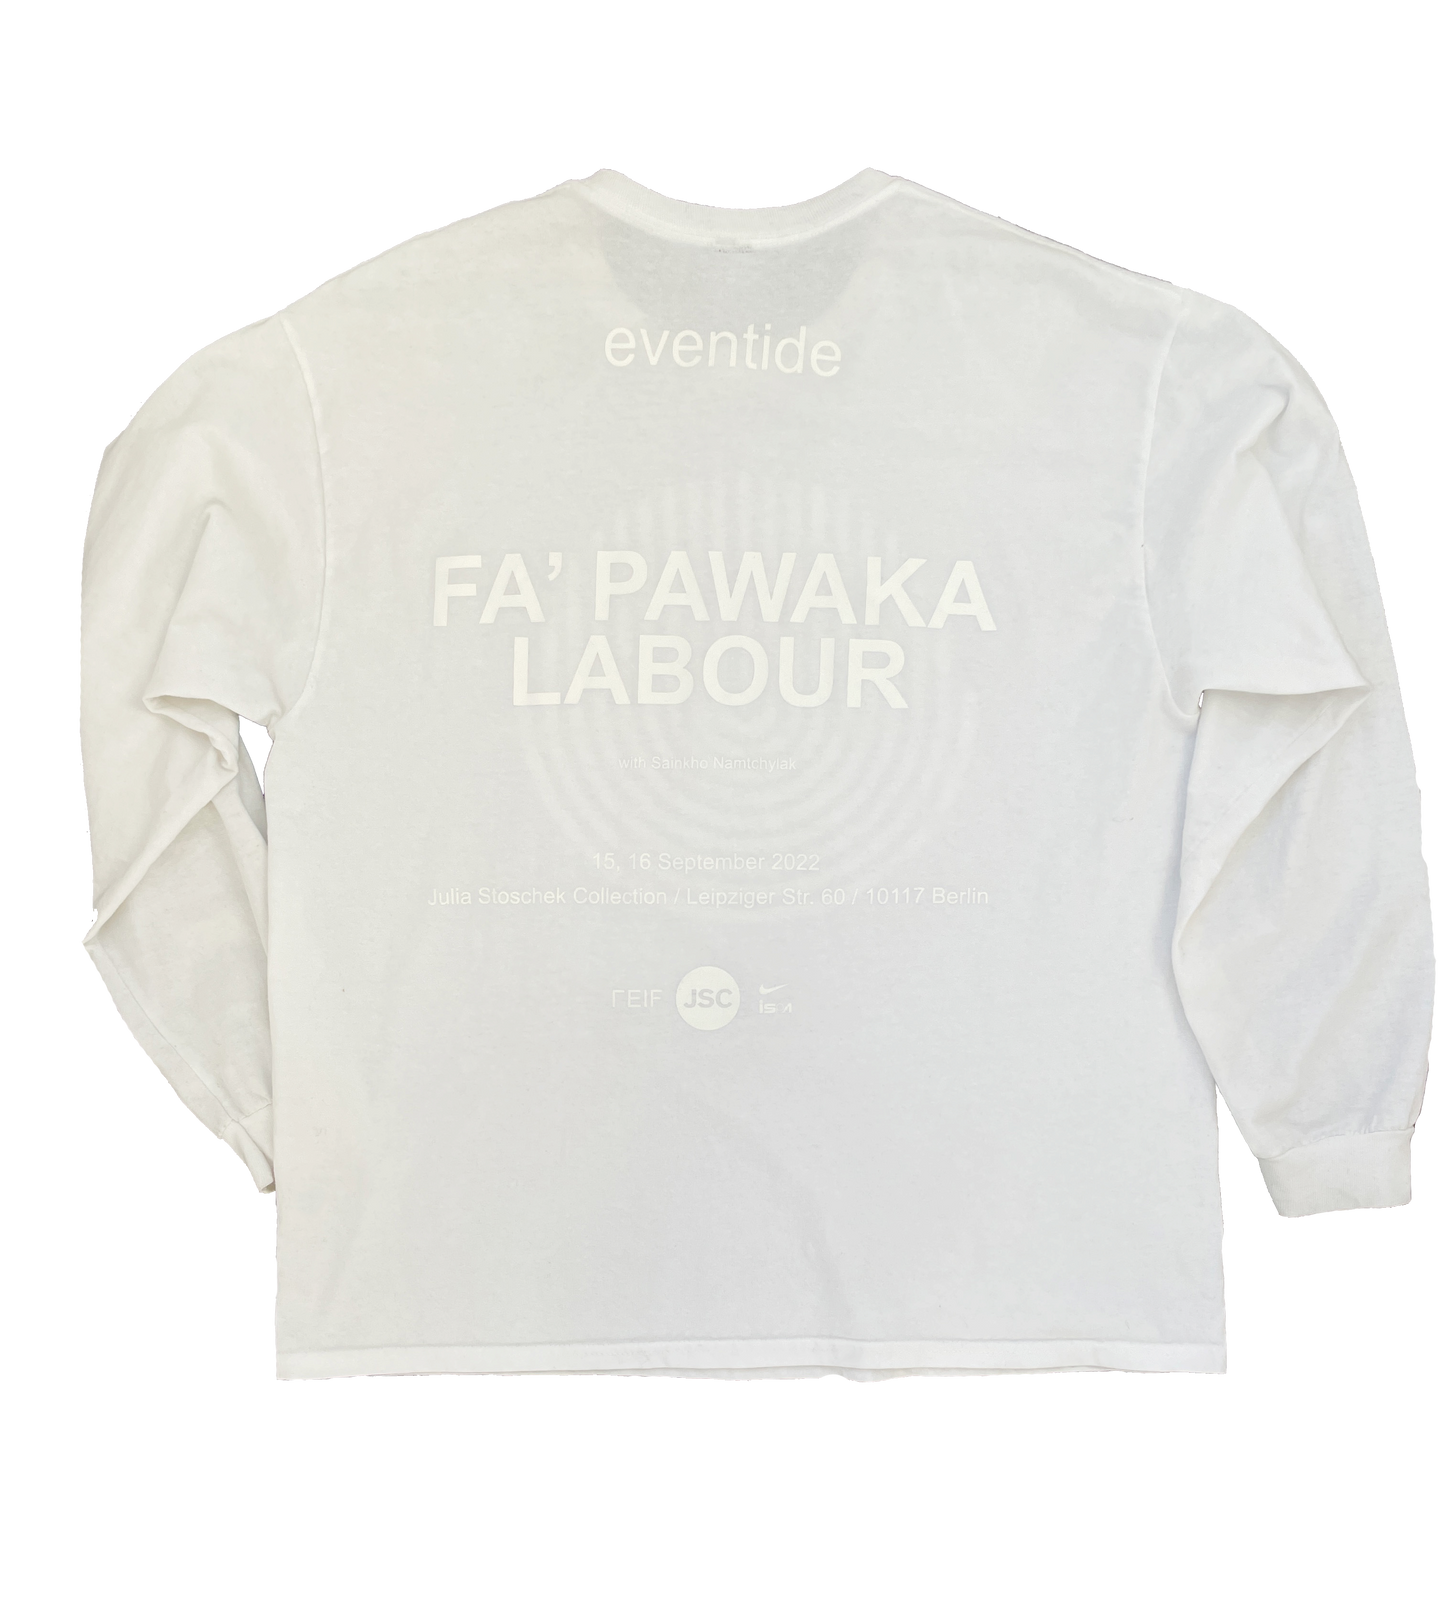 Fa Pawaka, LABOUR - Eventide - White Long-Sleeve XL